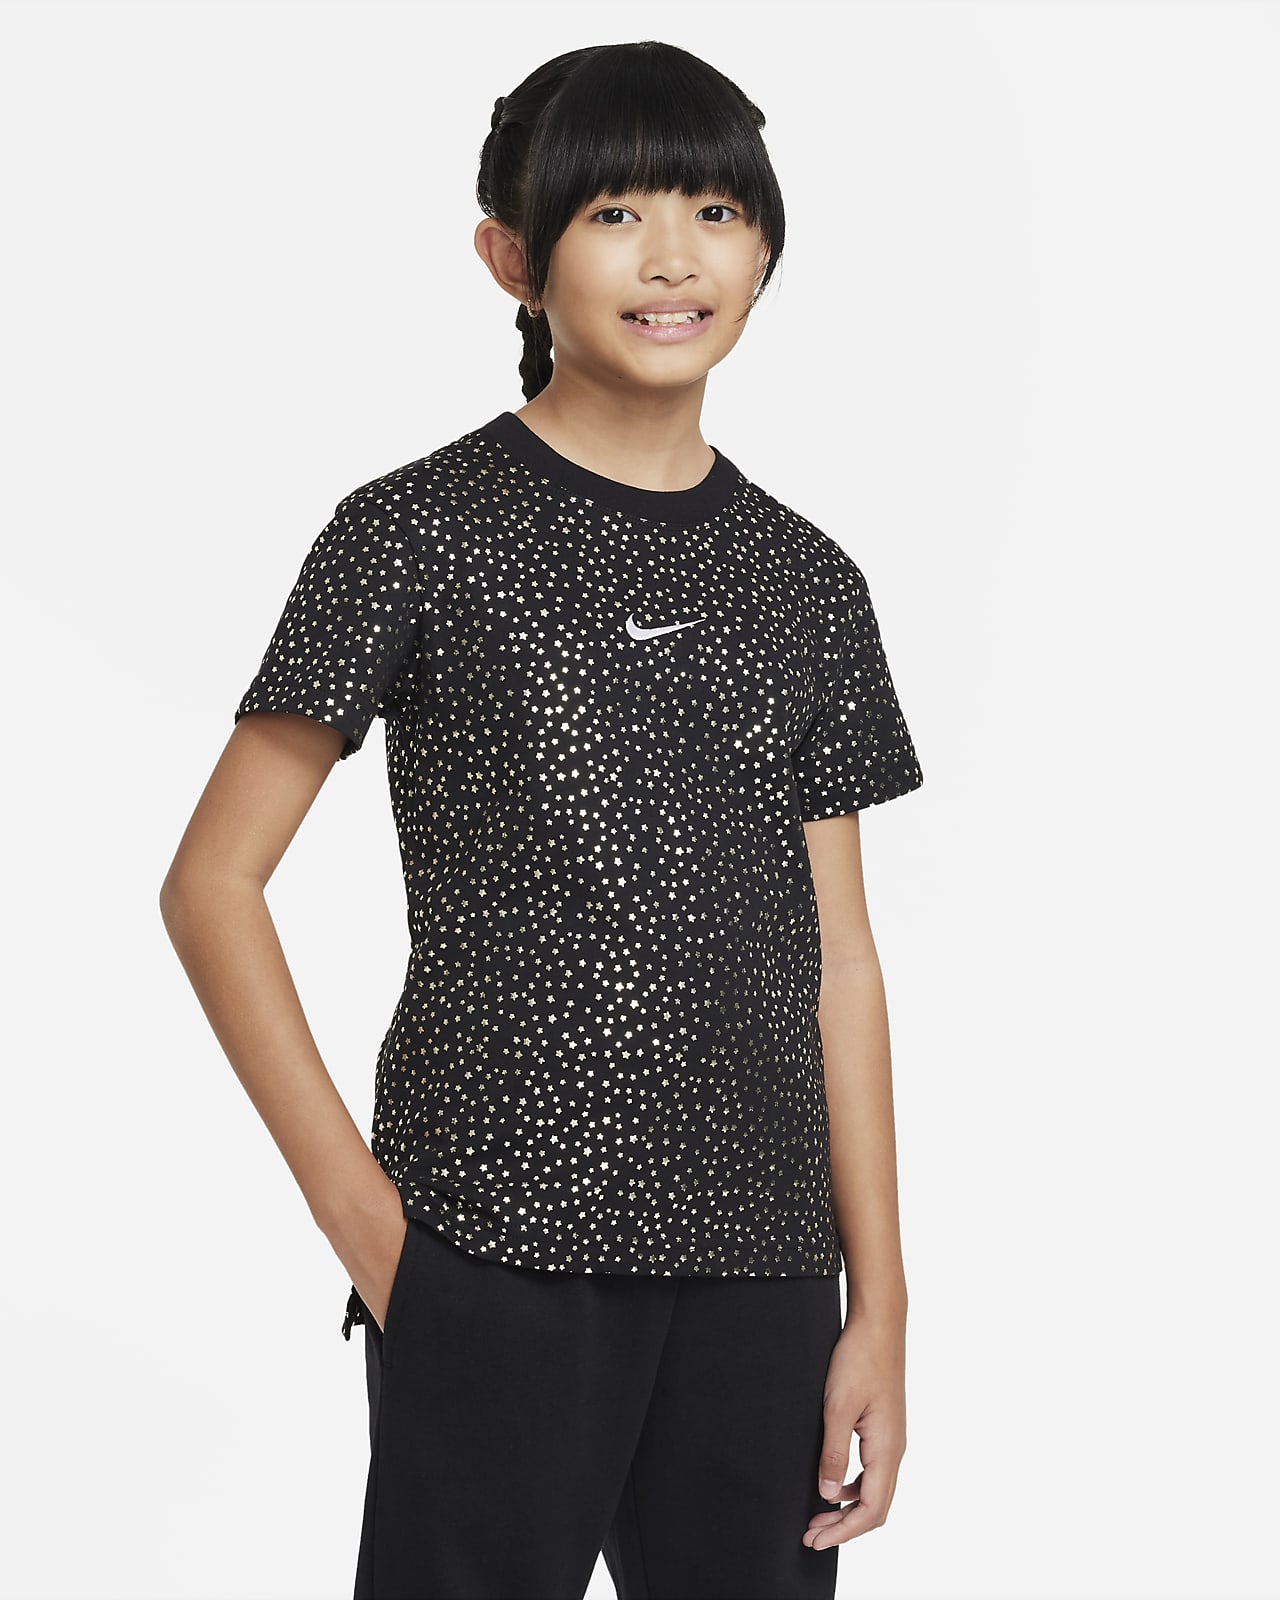 Nike Sportswear (Girls') T-Shirt. Nike.com